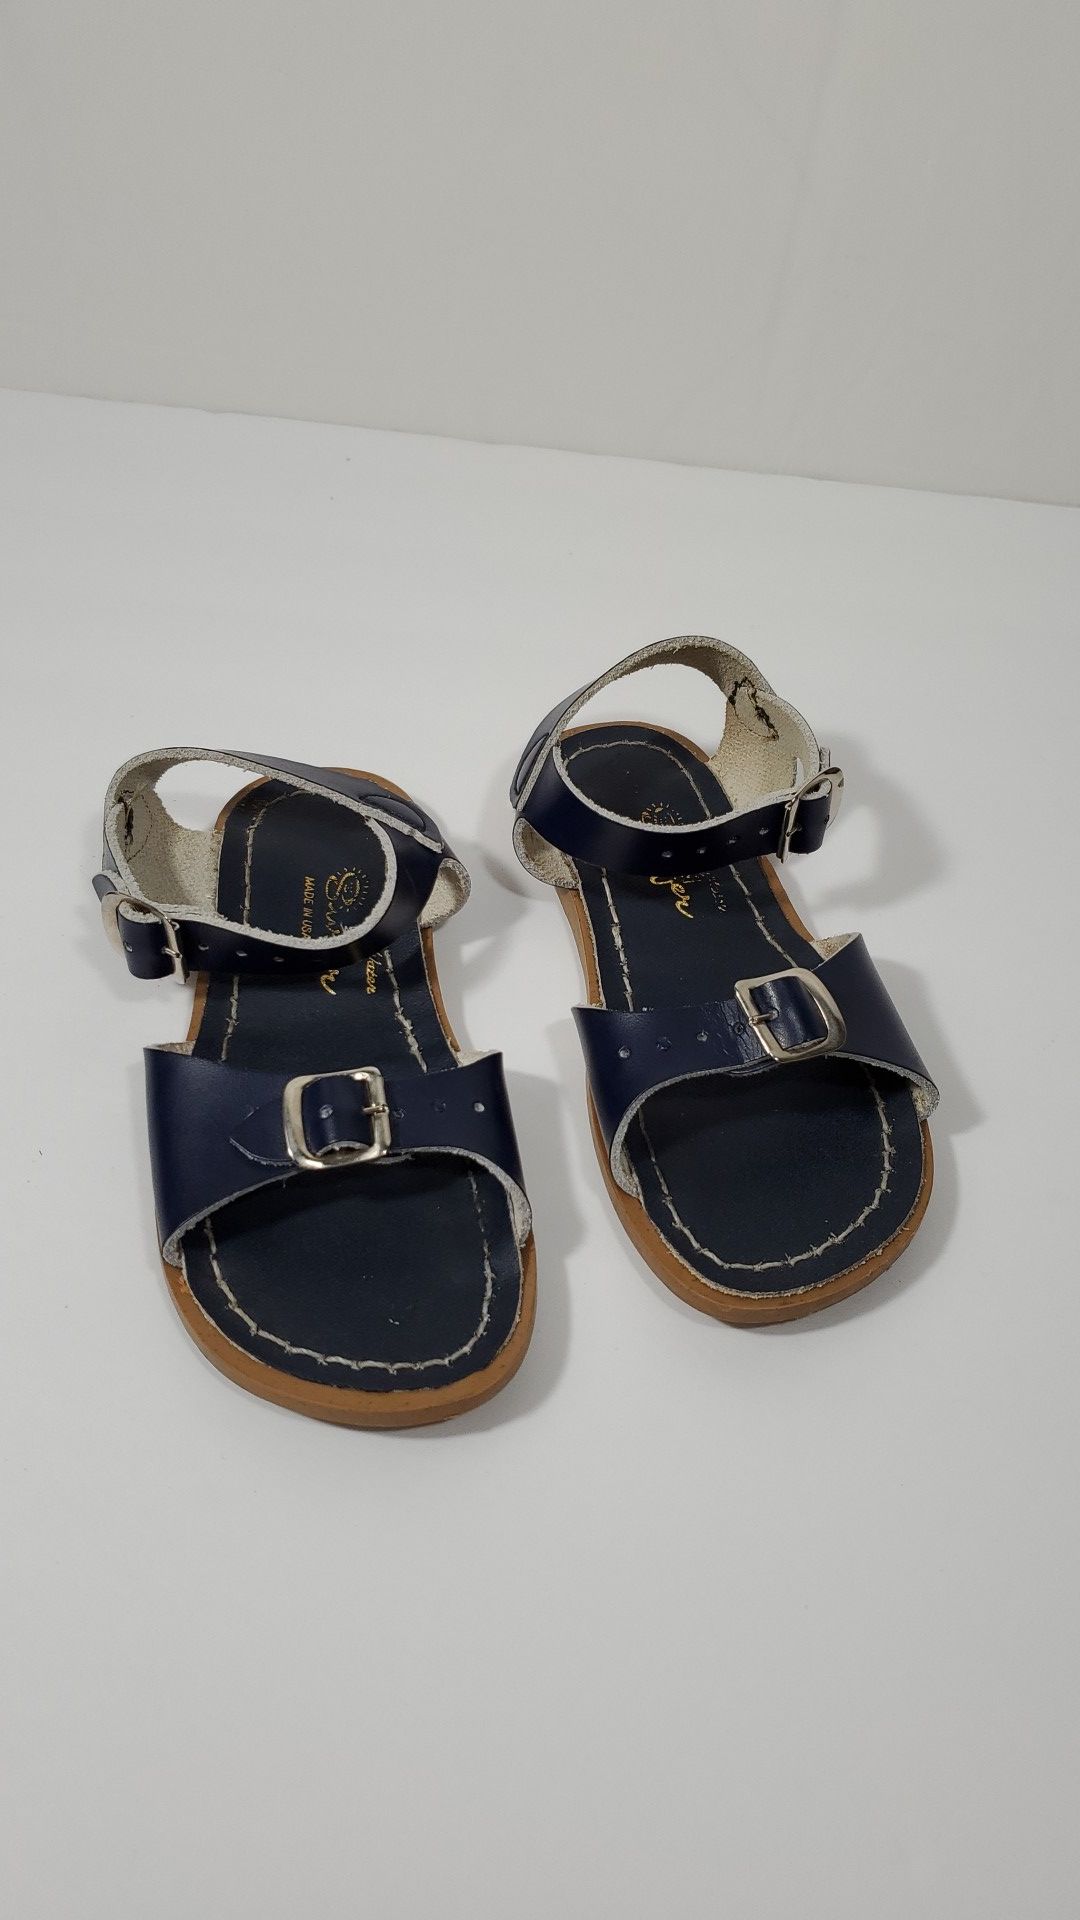 Salt water sandals